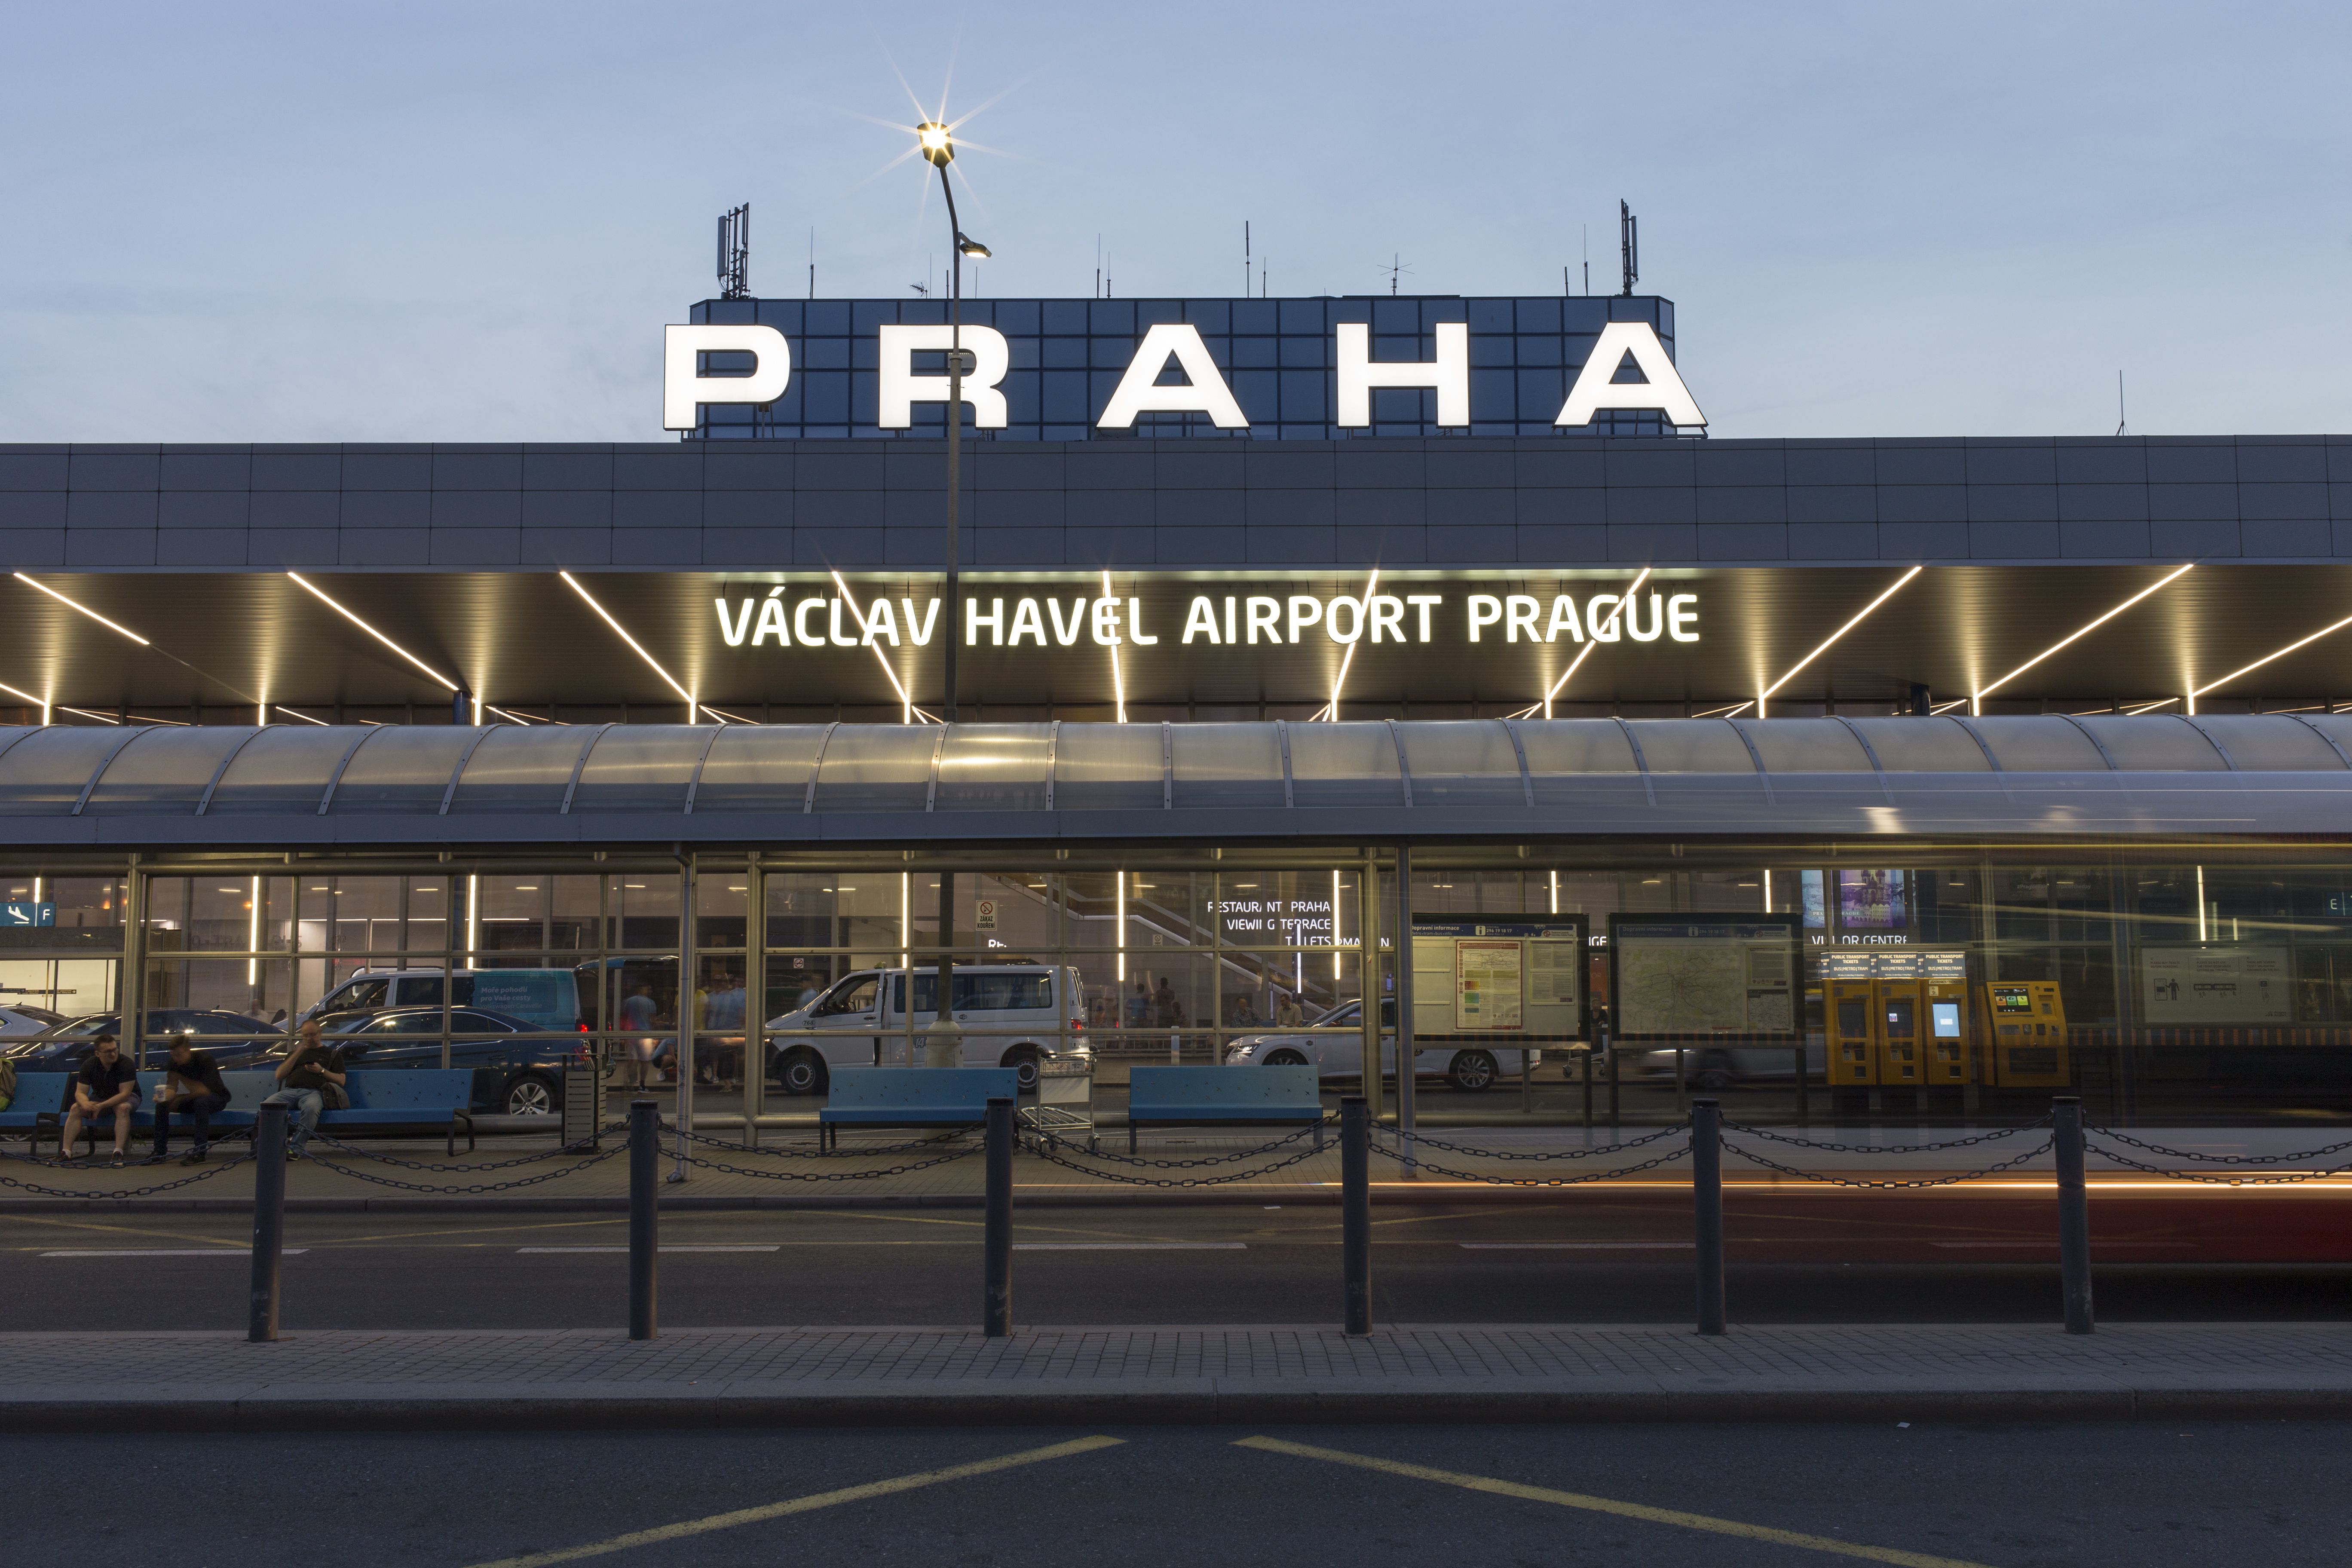 Prague airport